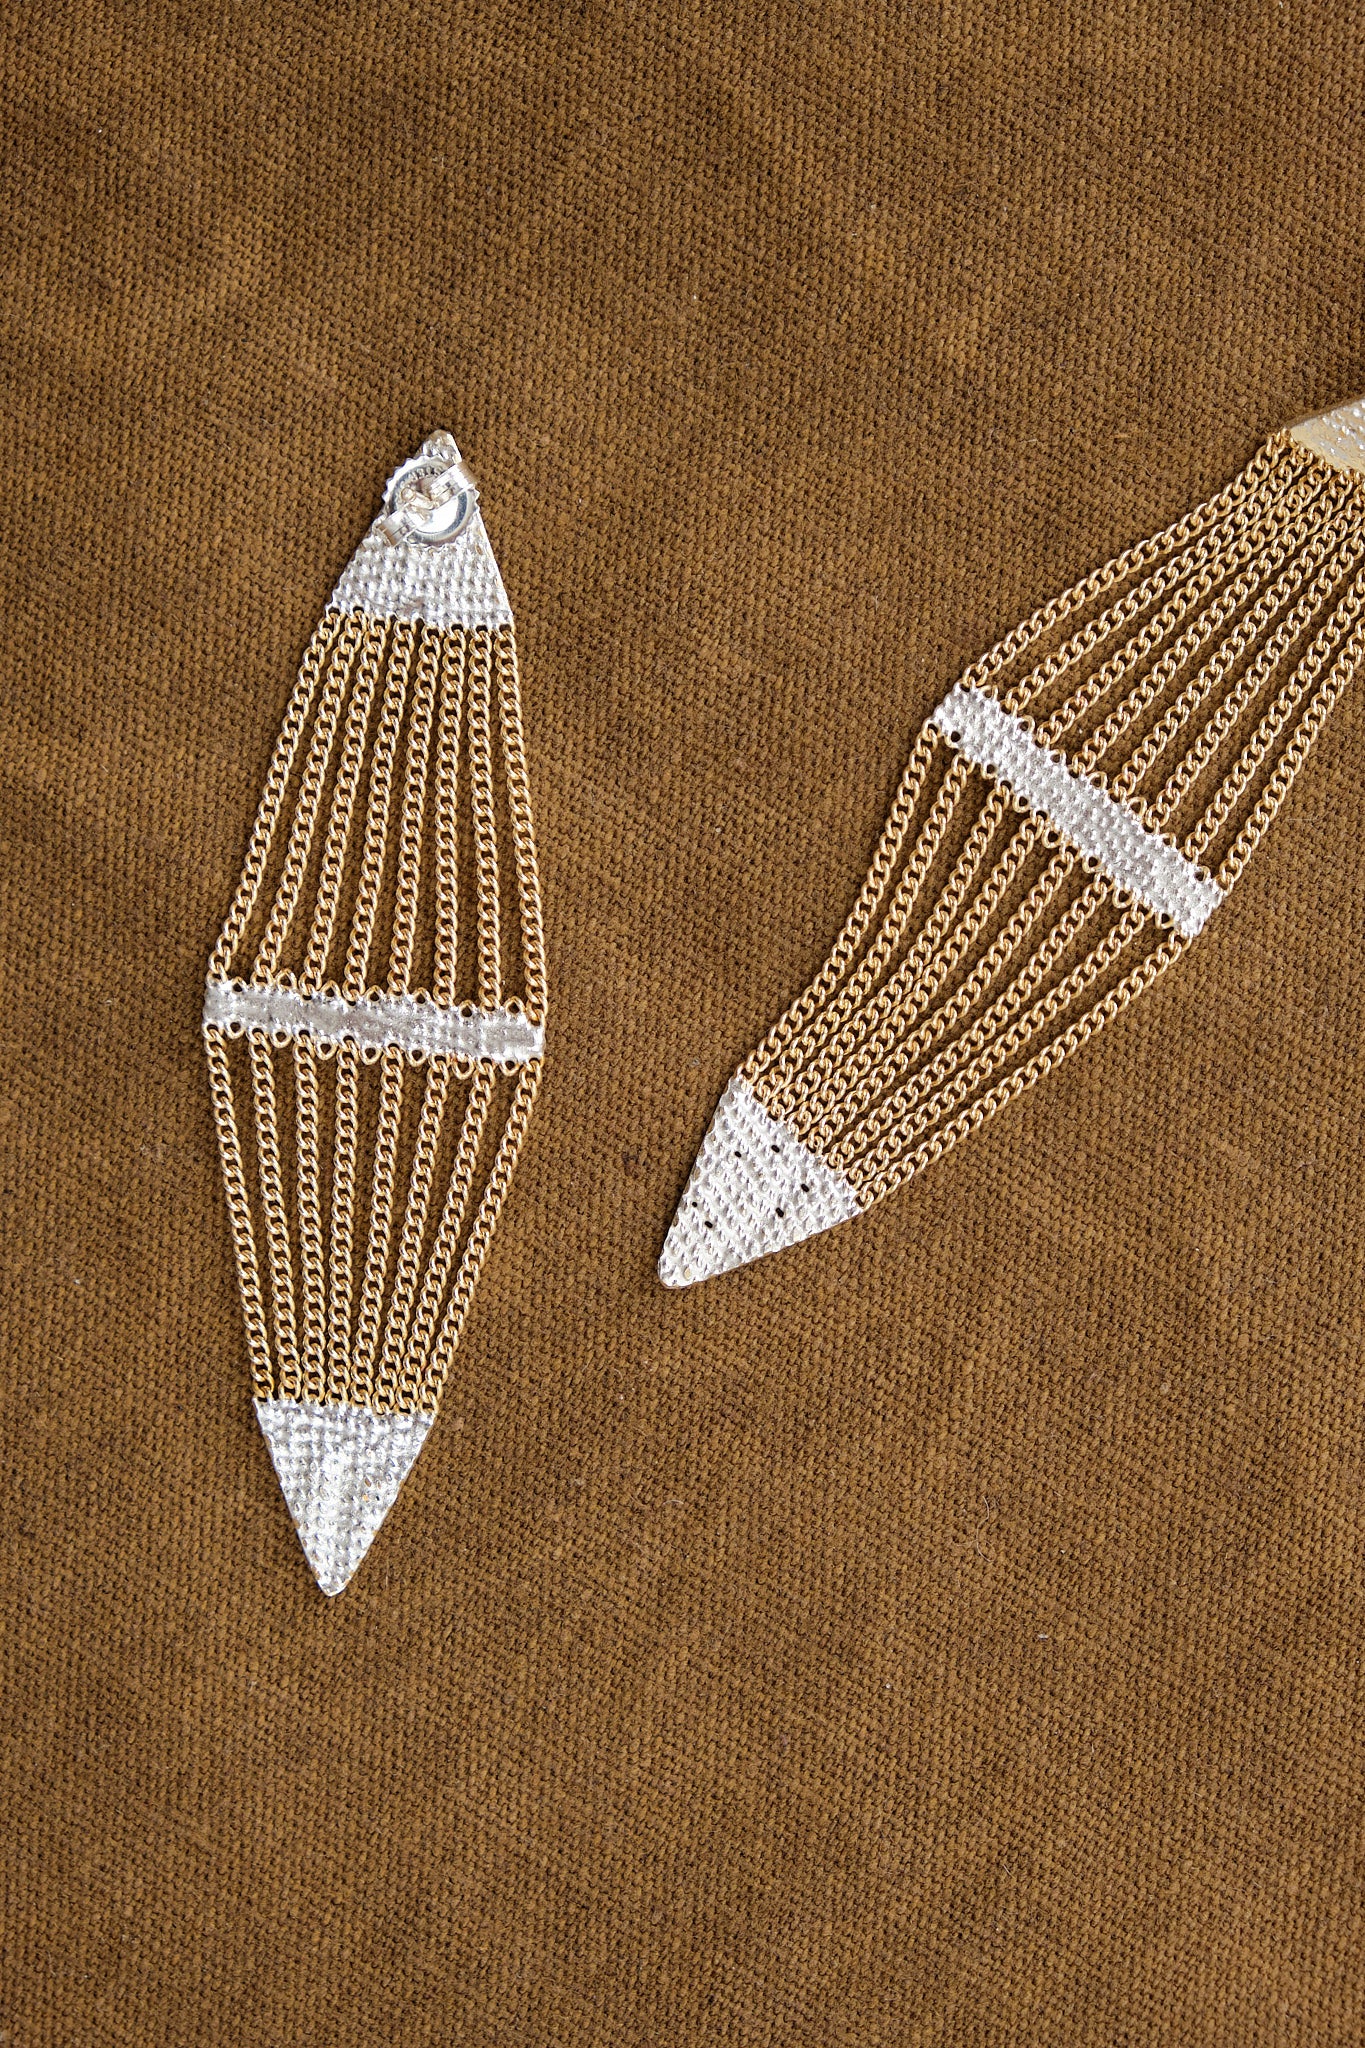  Canoe Earrings HannahK